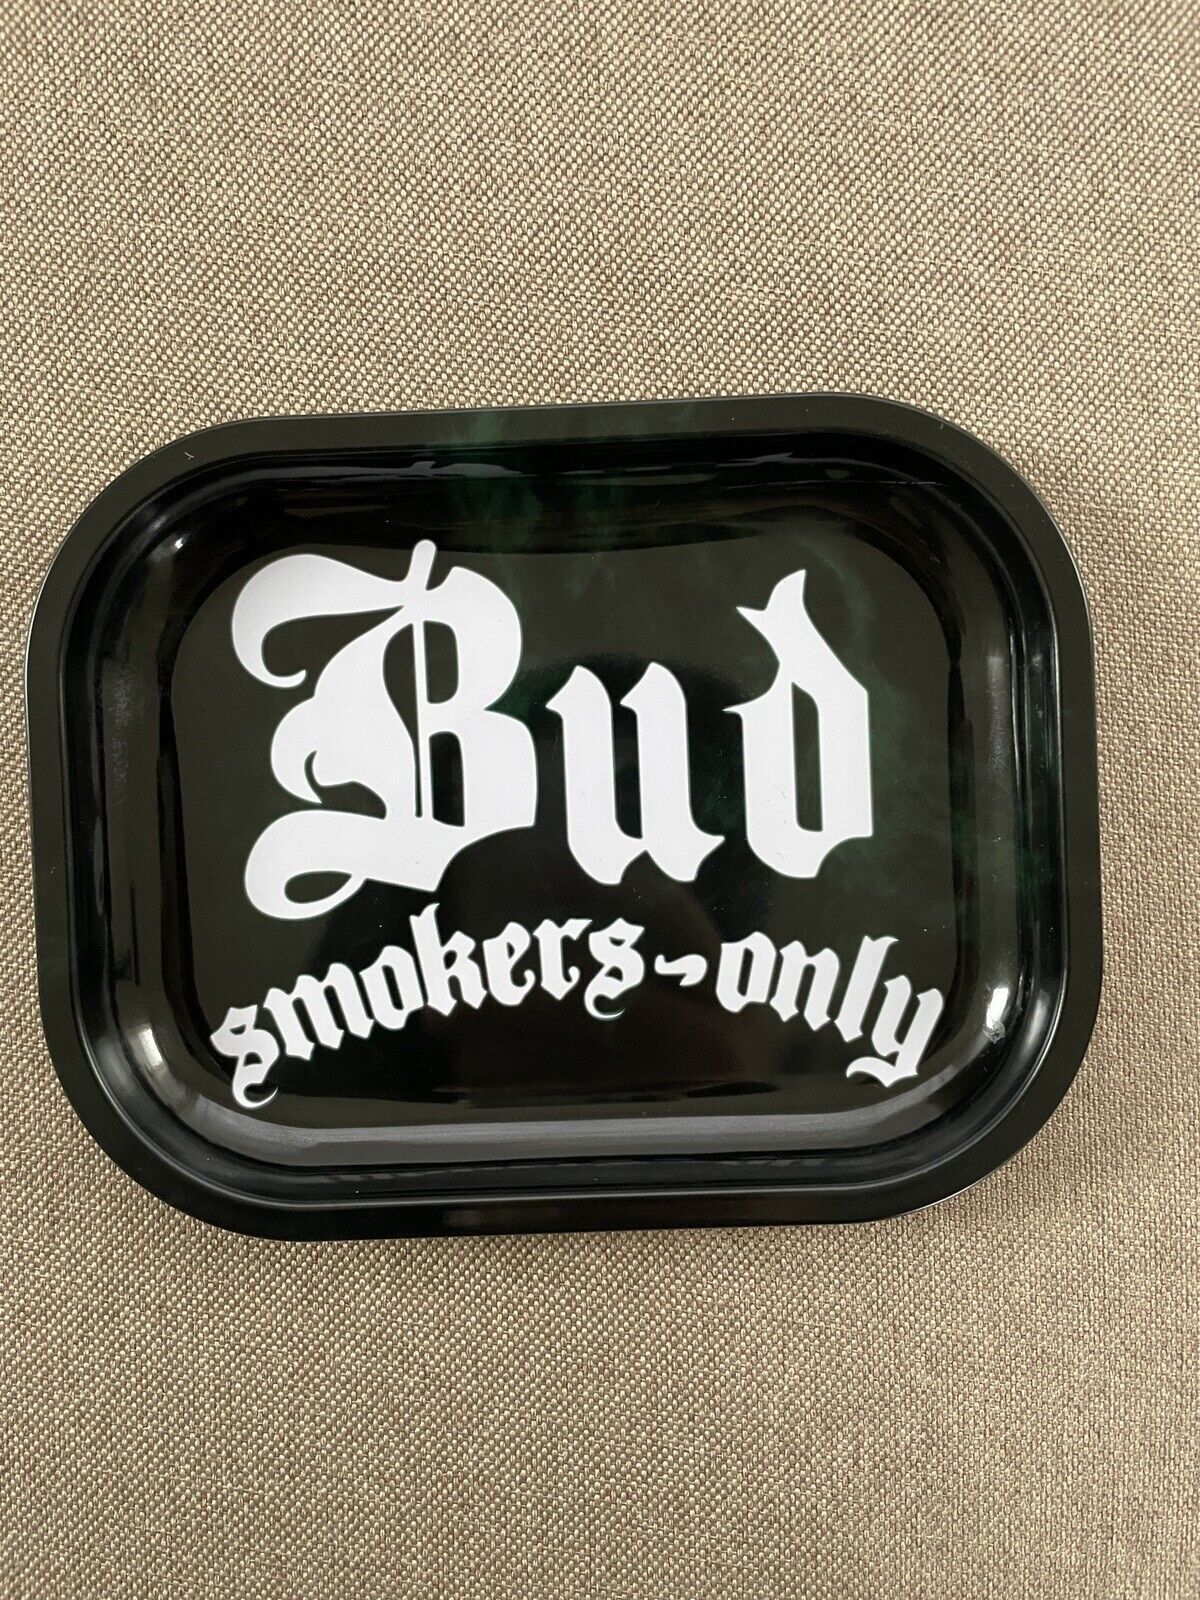 Bone Thugs n Hamony “Bud Smokers Only” Blunt Rolling Tray 7”